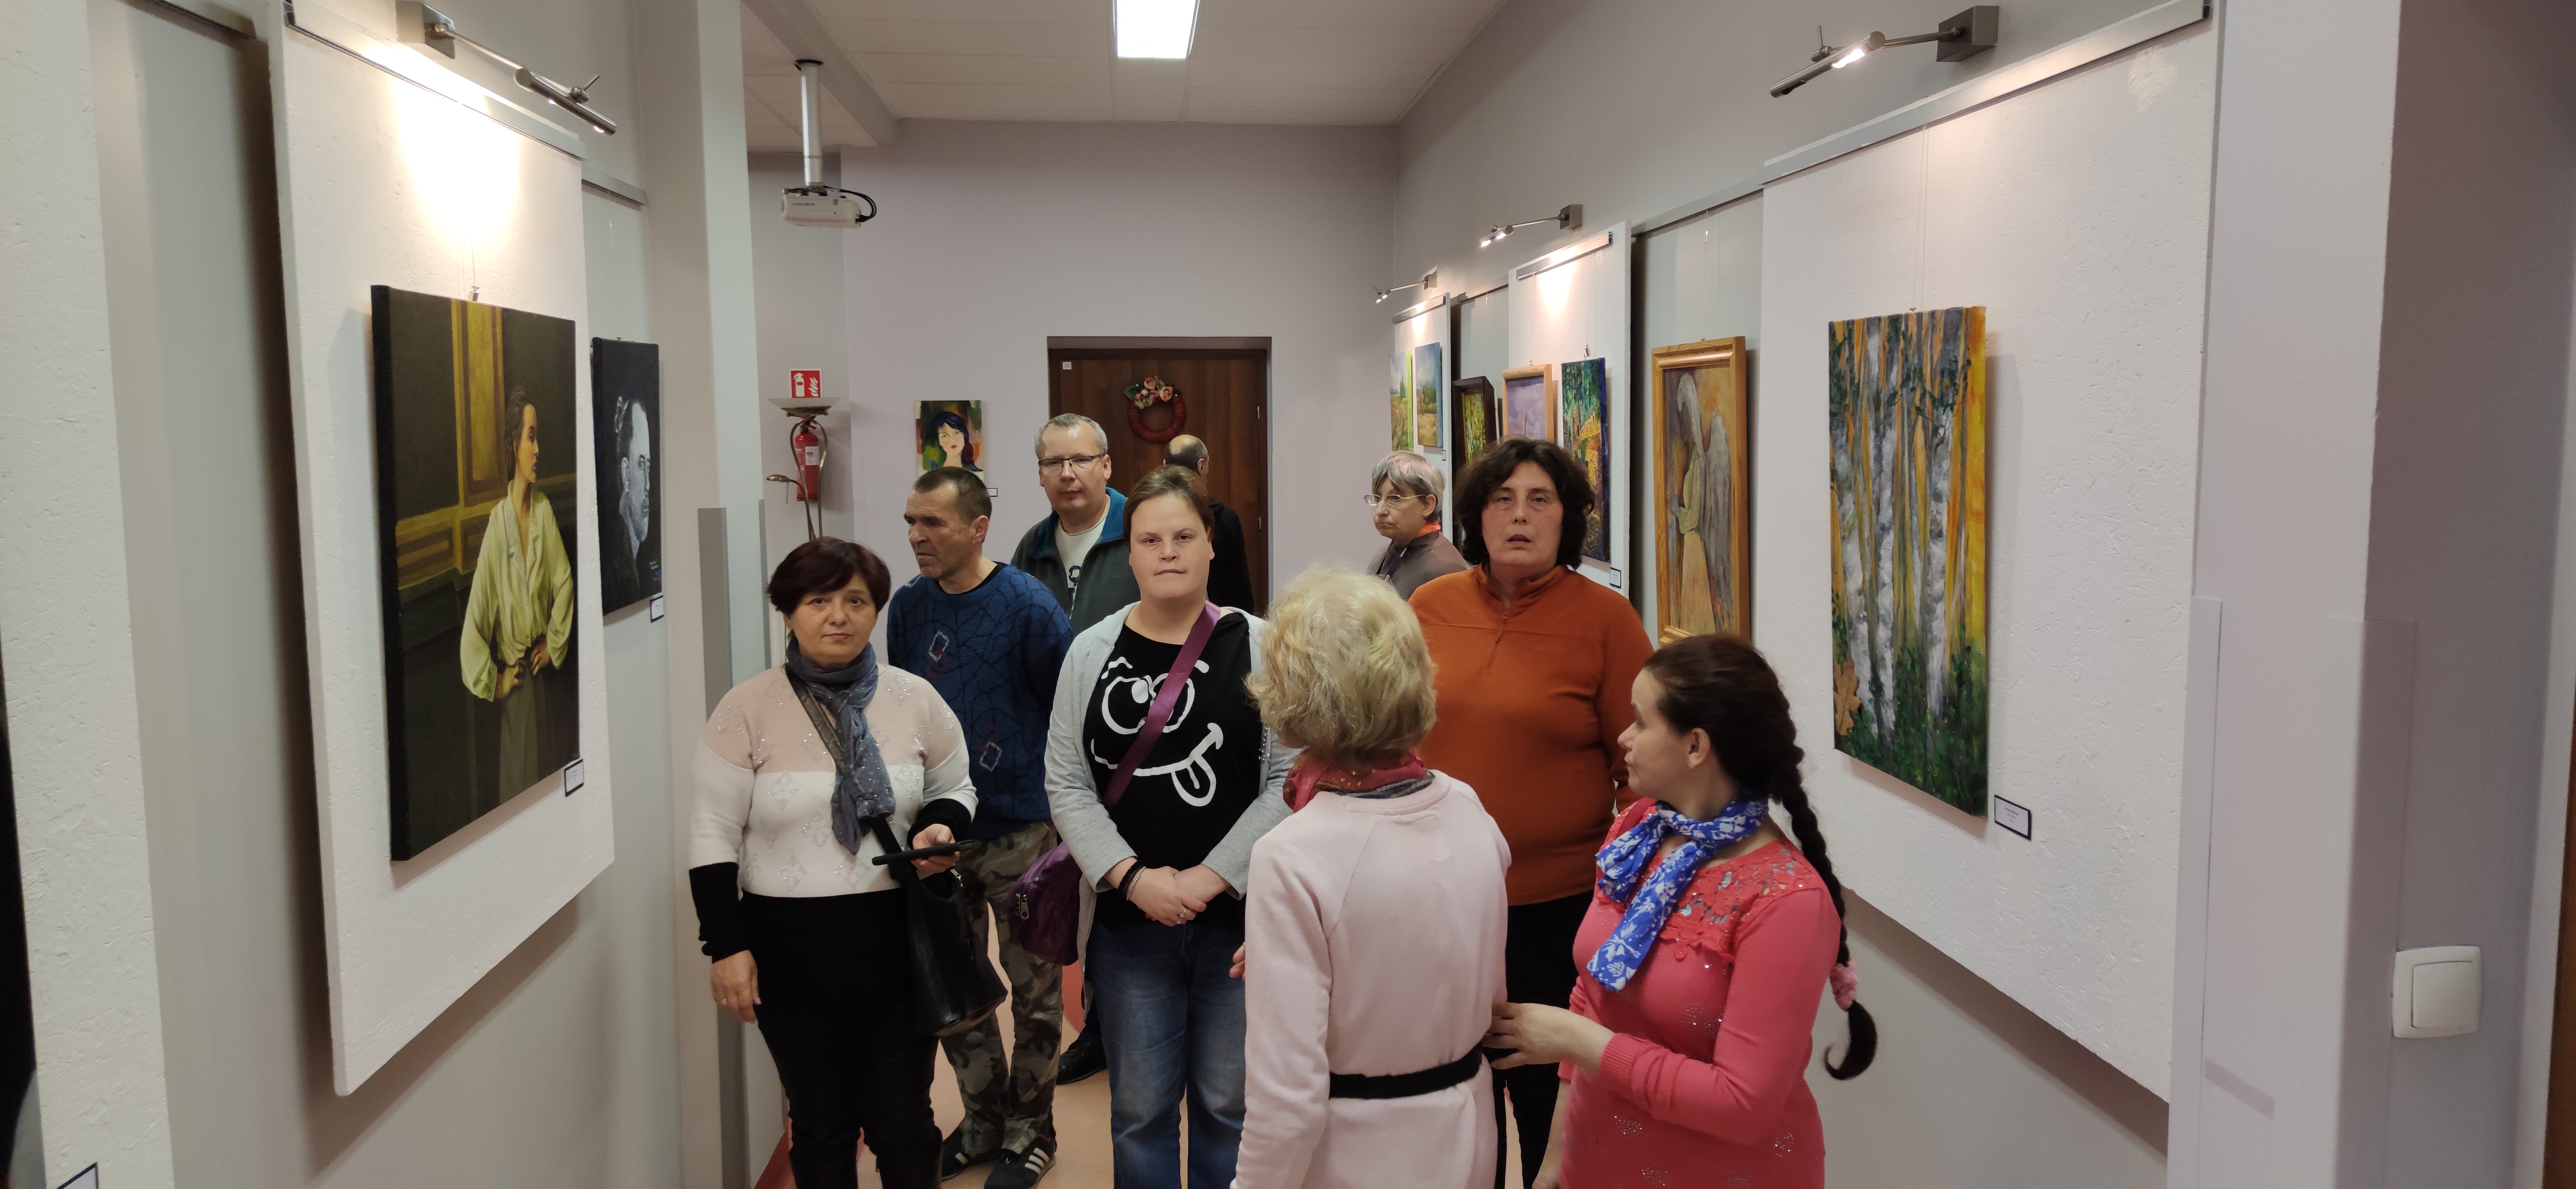 Grupa osób ogląda obrazy w galerii na ścianach.